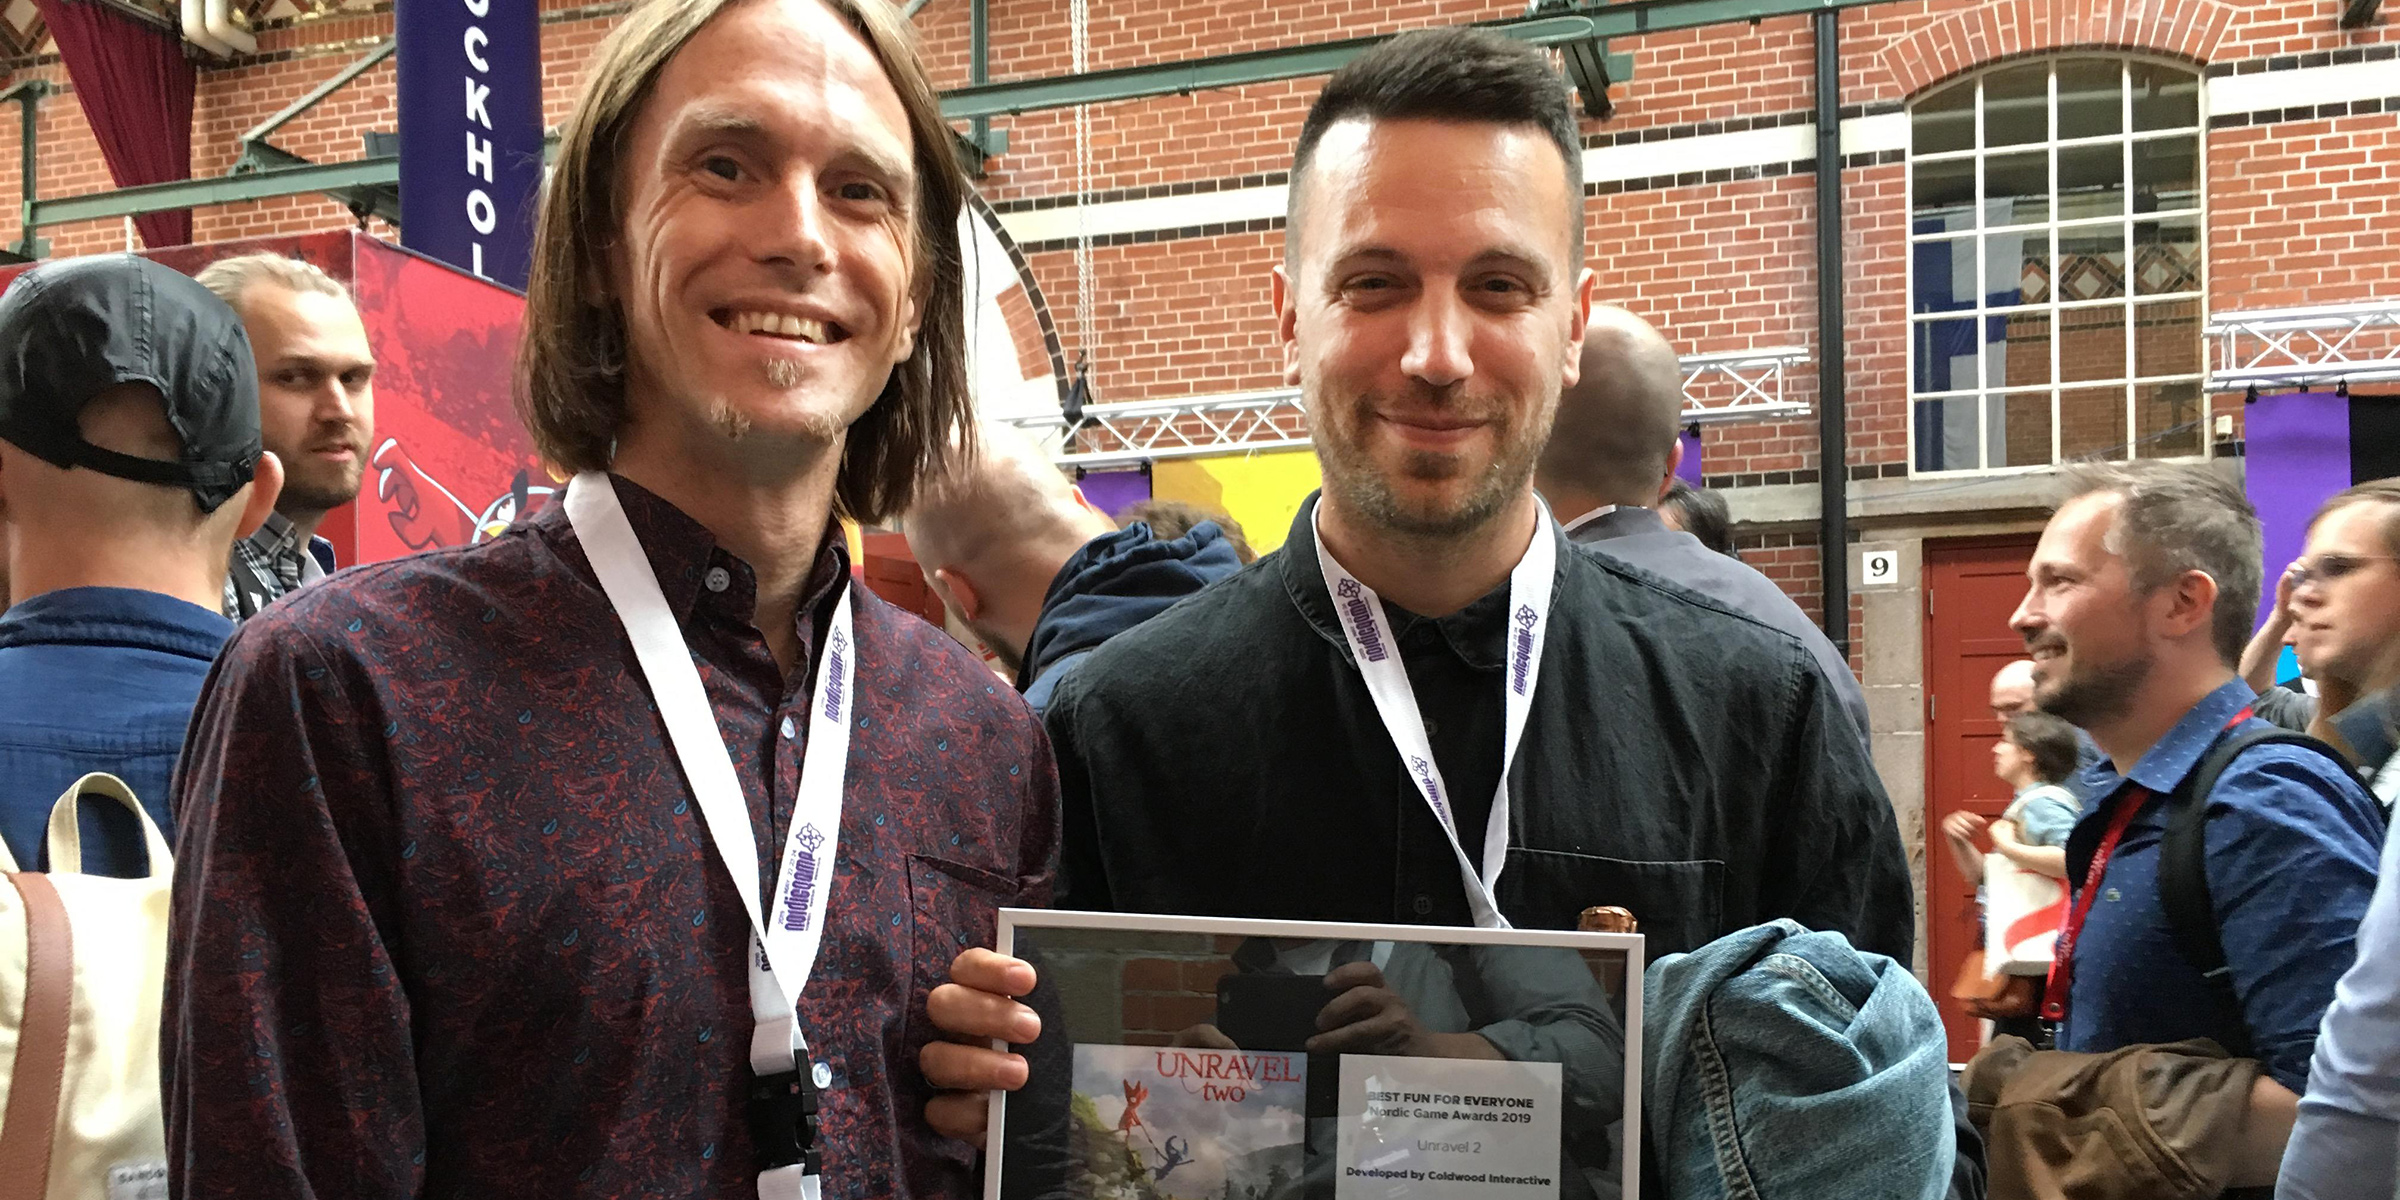 Nordic Game Awards winners - Nordic Game Community